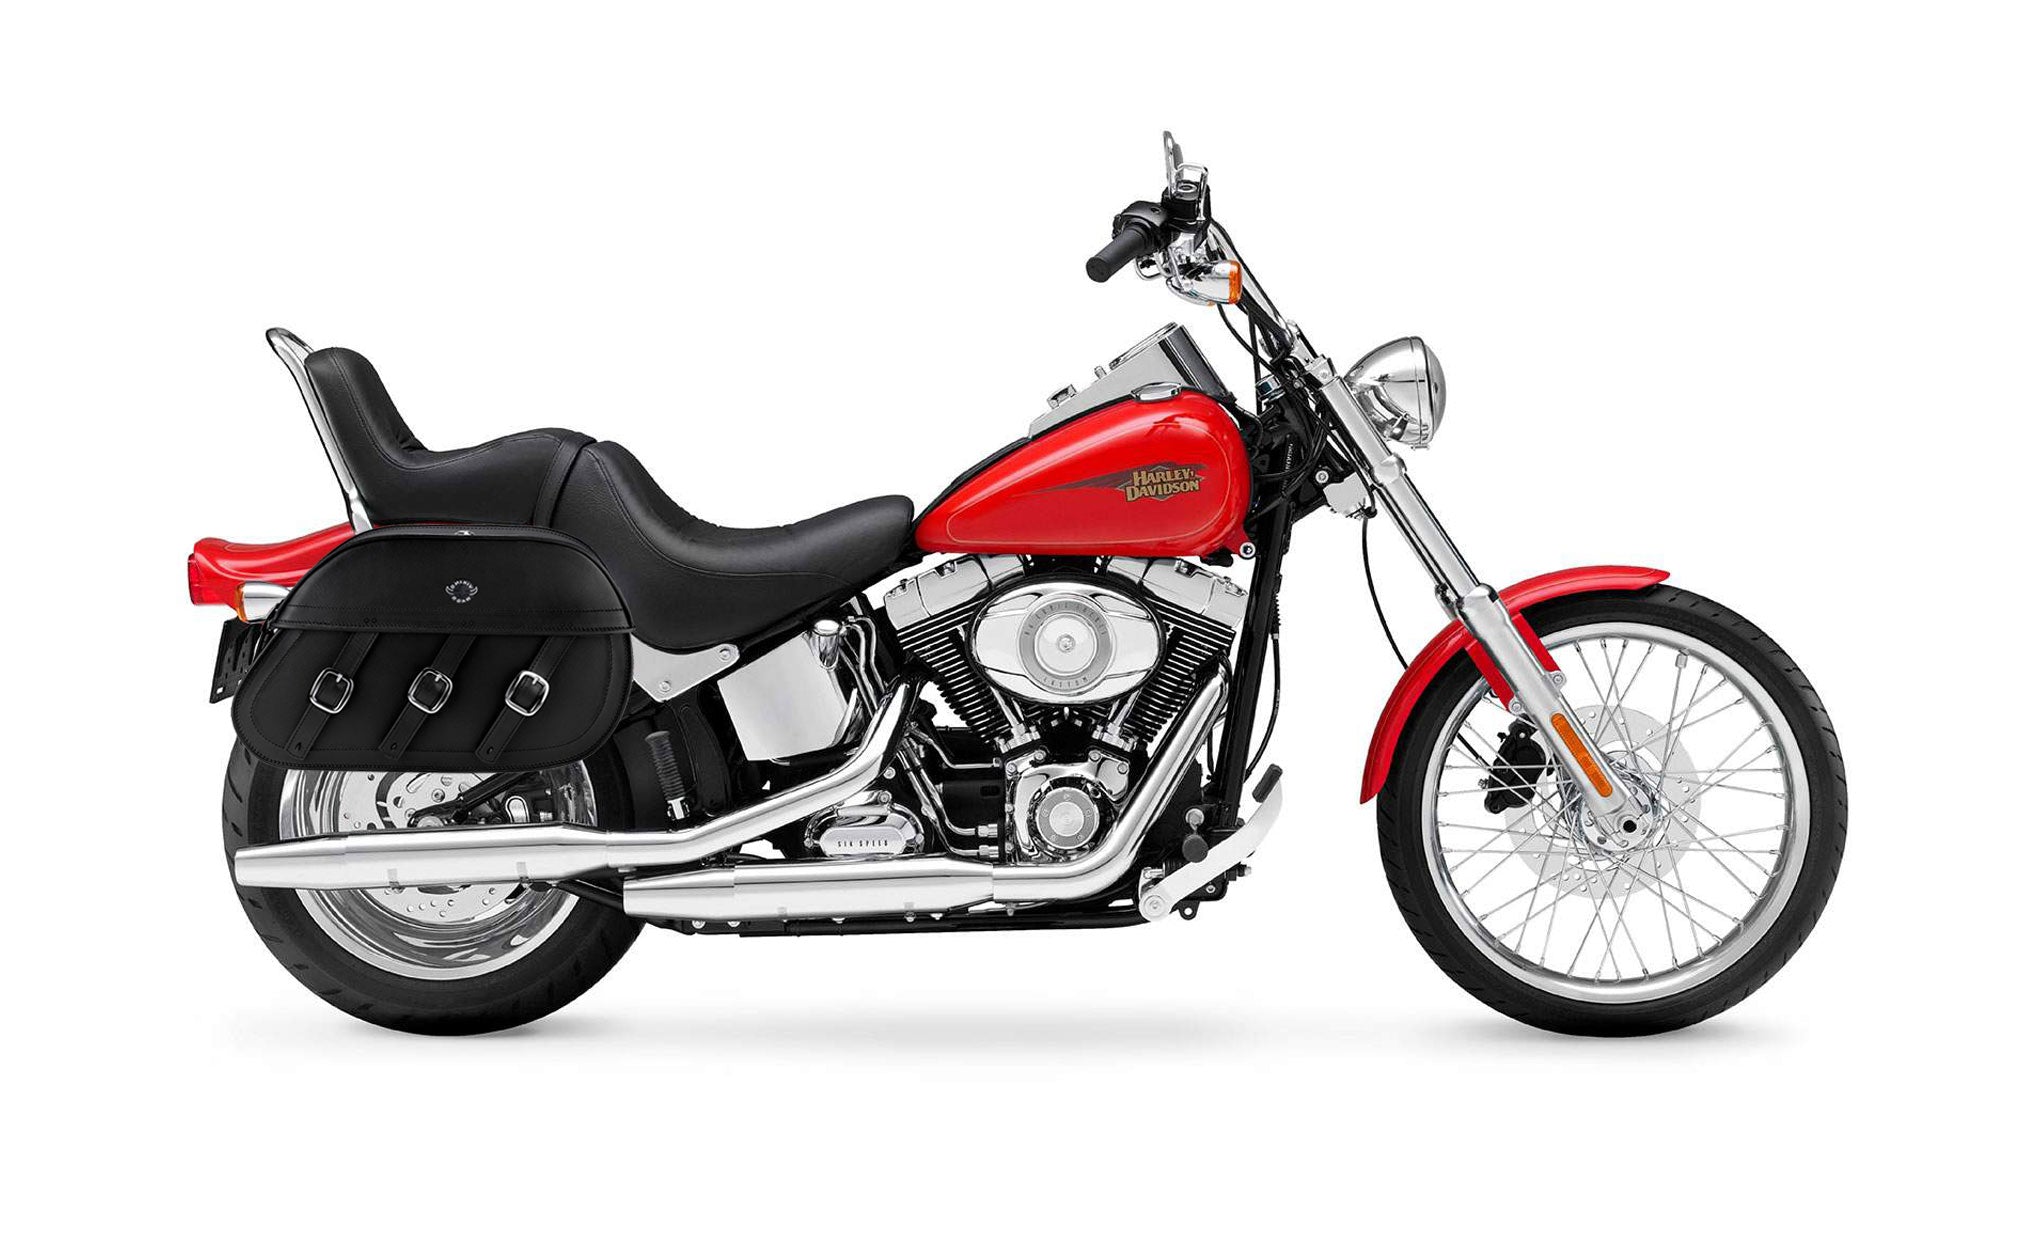 Viking Trianon Extra Large Leather Motorcycle Saddlebags For Harley Softail Custom Fxstc on Bike Photo @expand